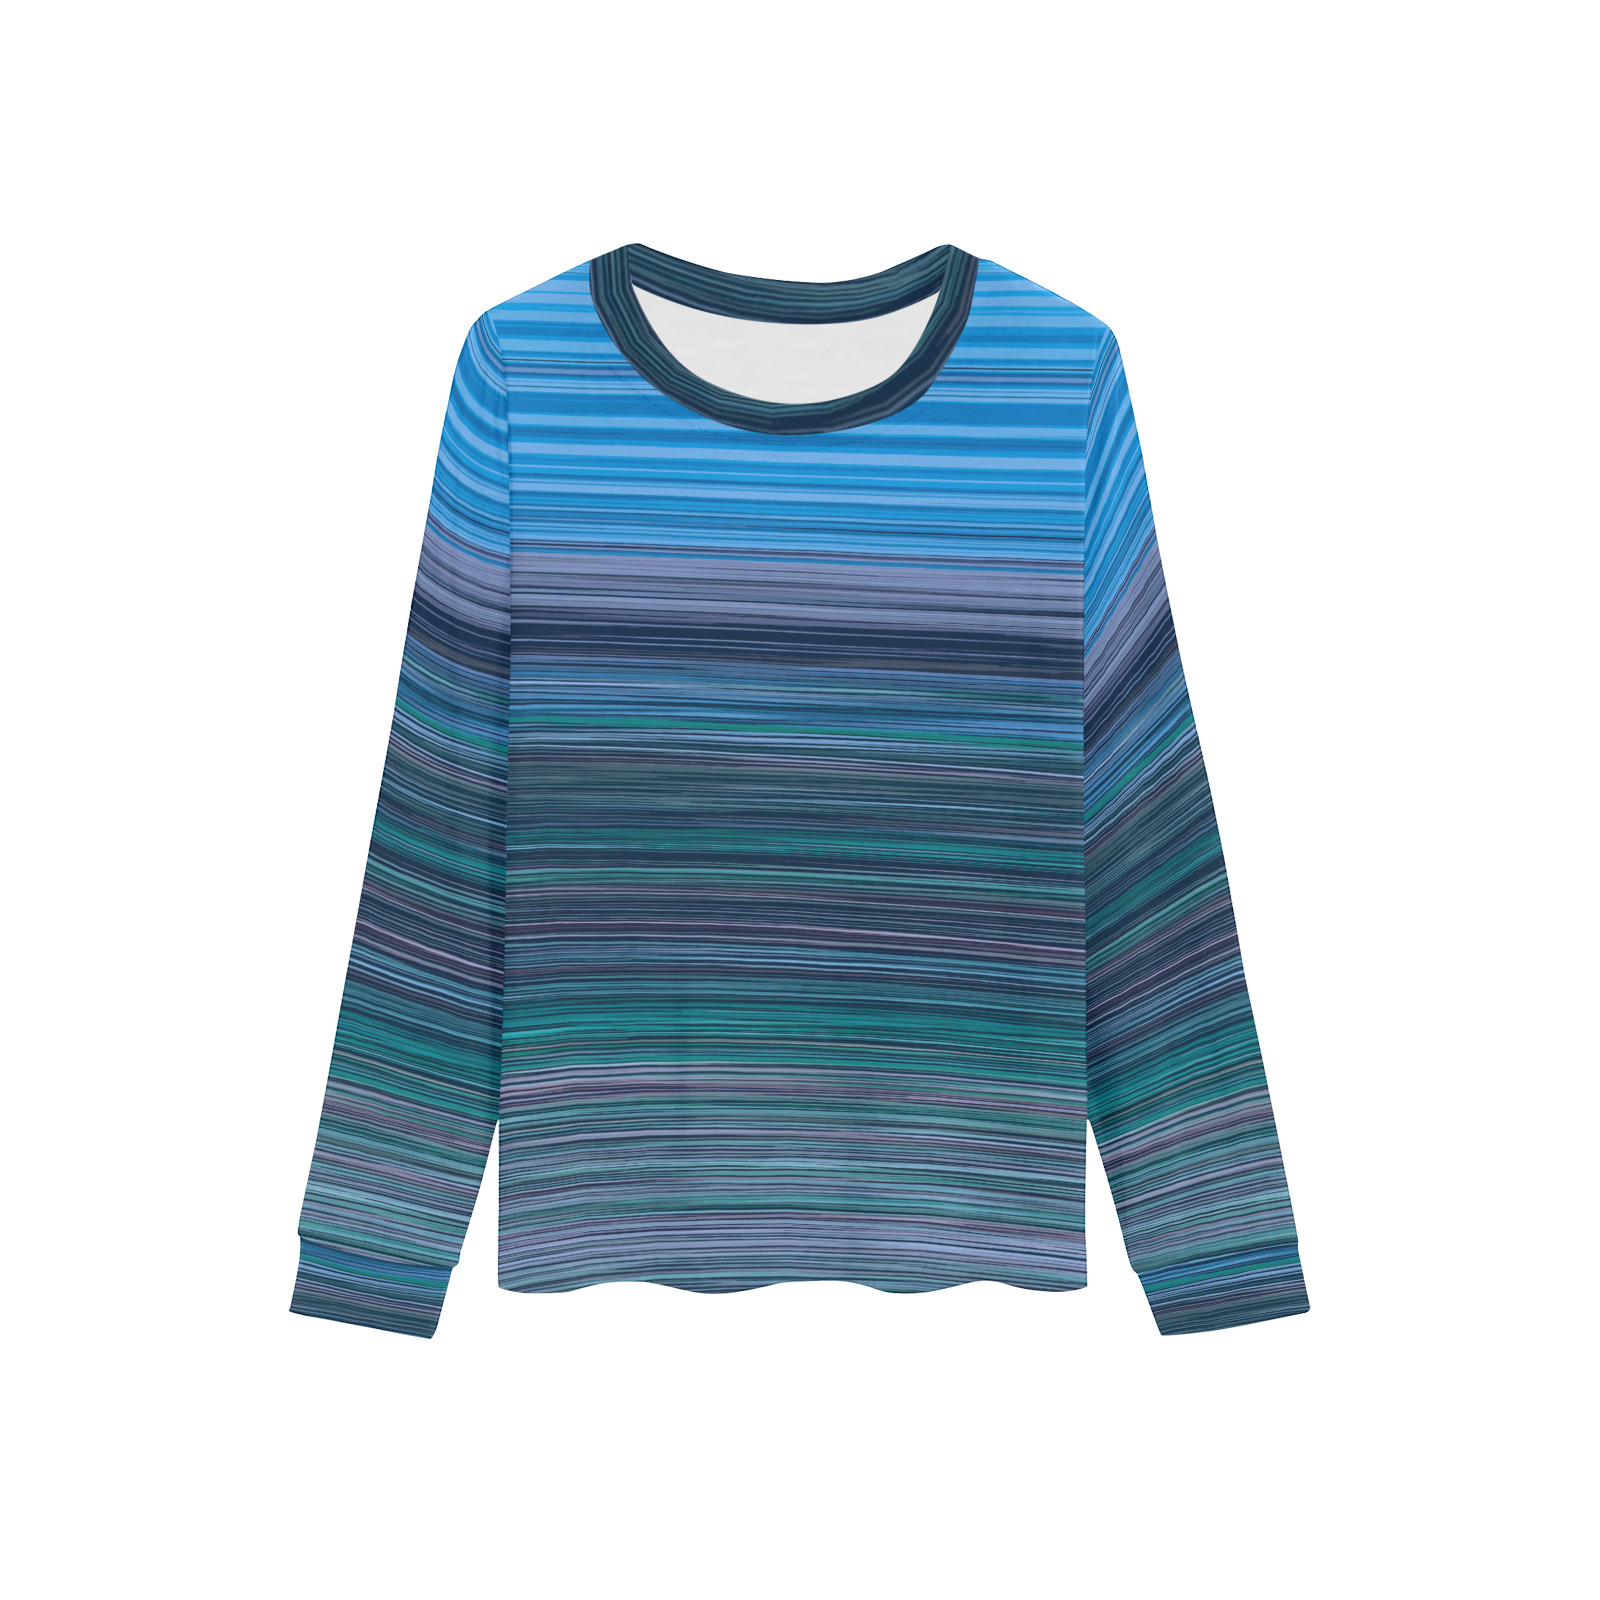 Abstract Blue Horizontal Stripes Kids' All Over Print Pajama Top